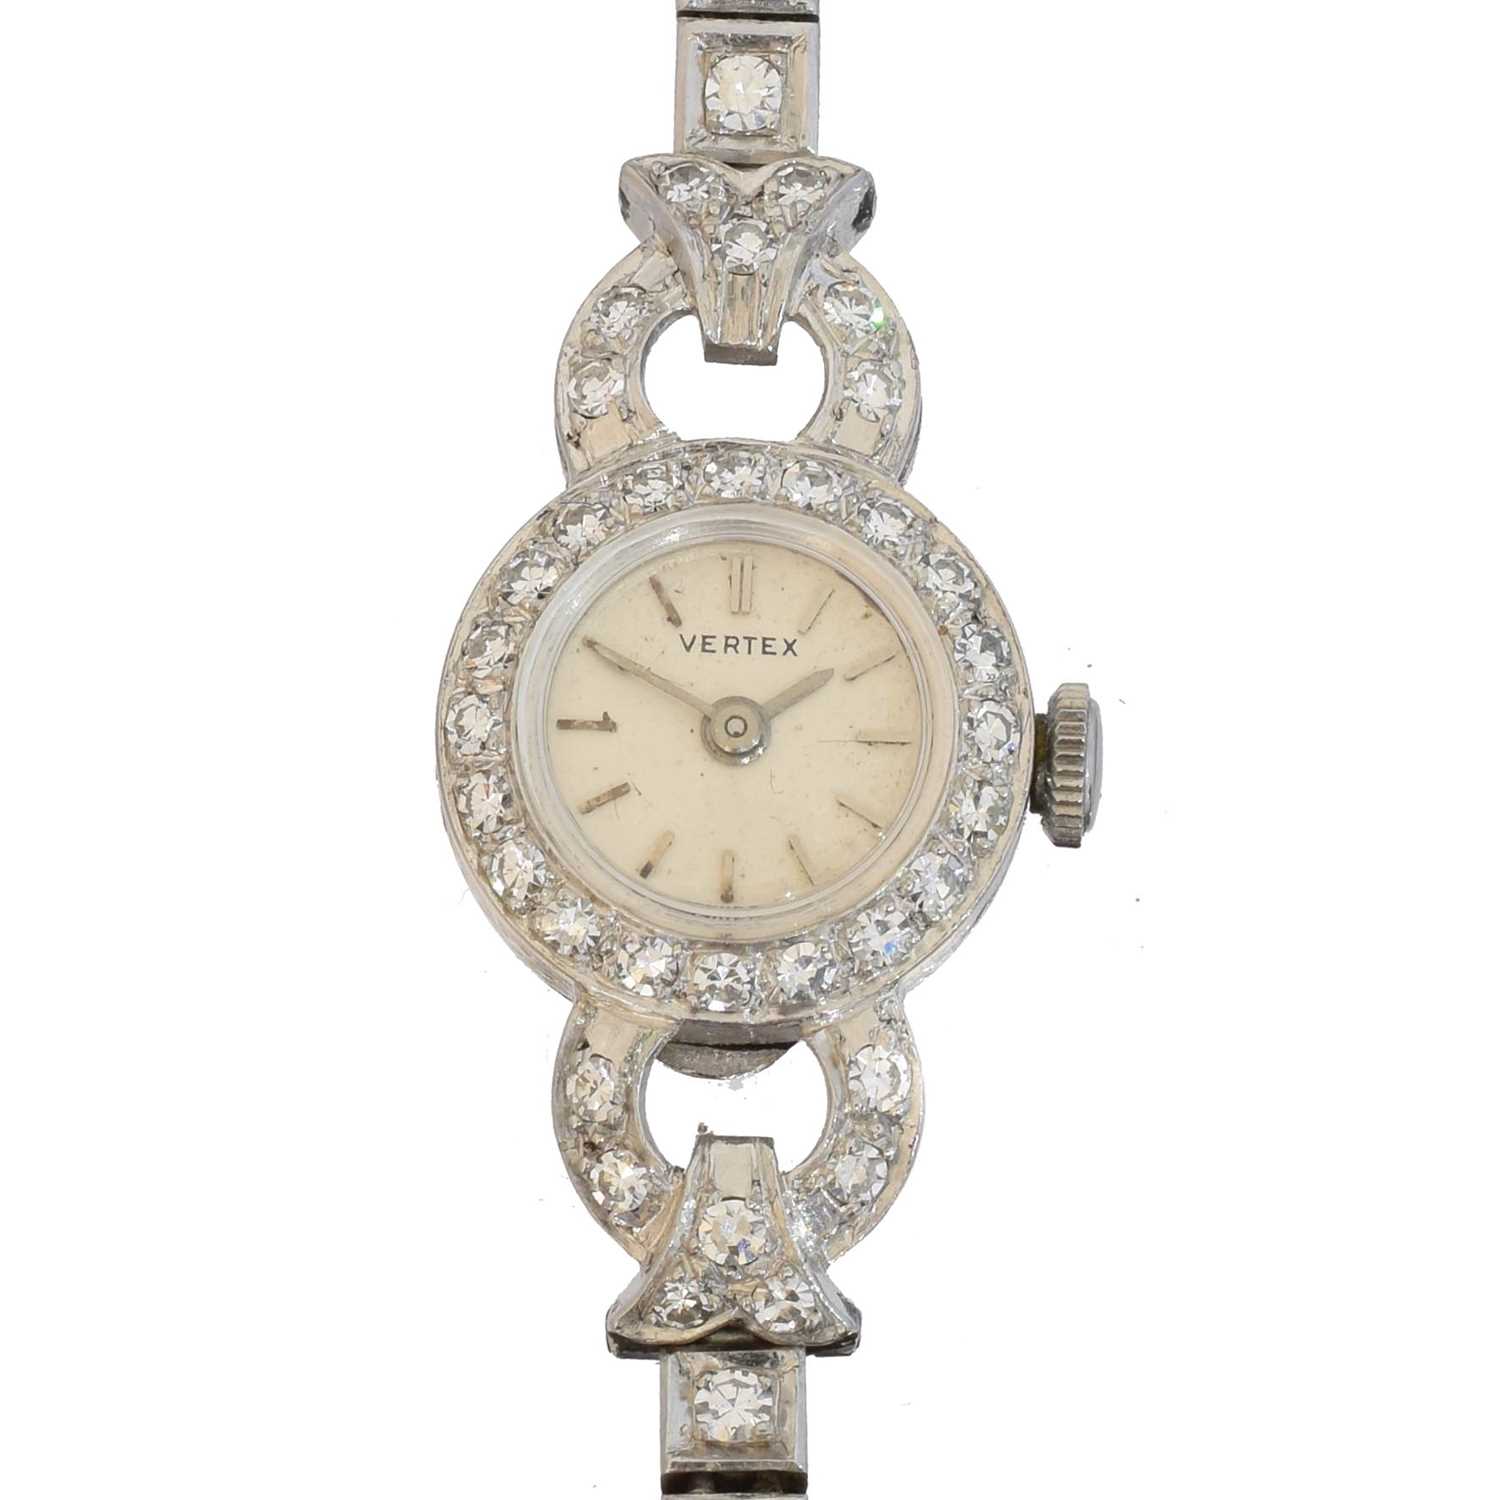 211 - A platinum and diamond Vertex cocktail watch,